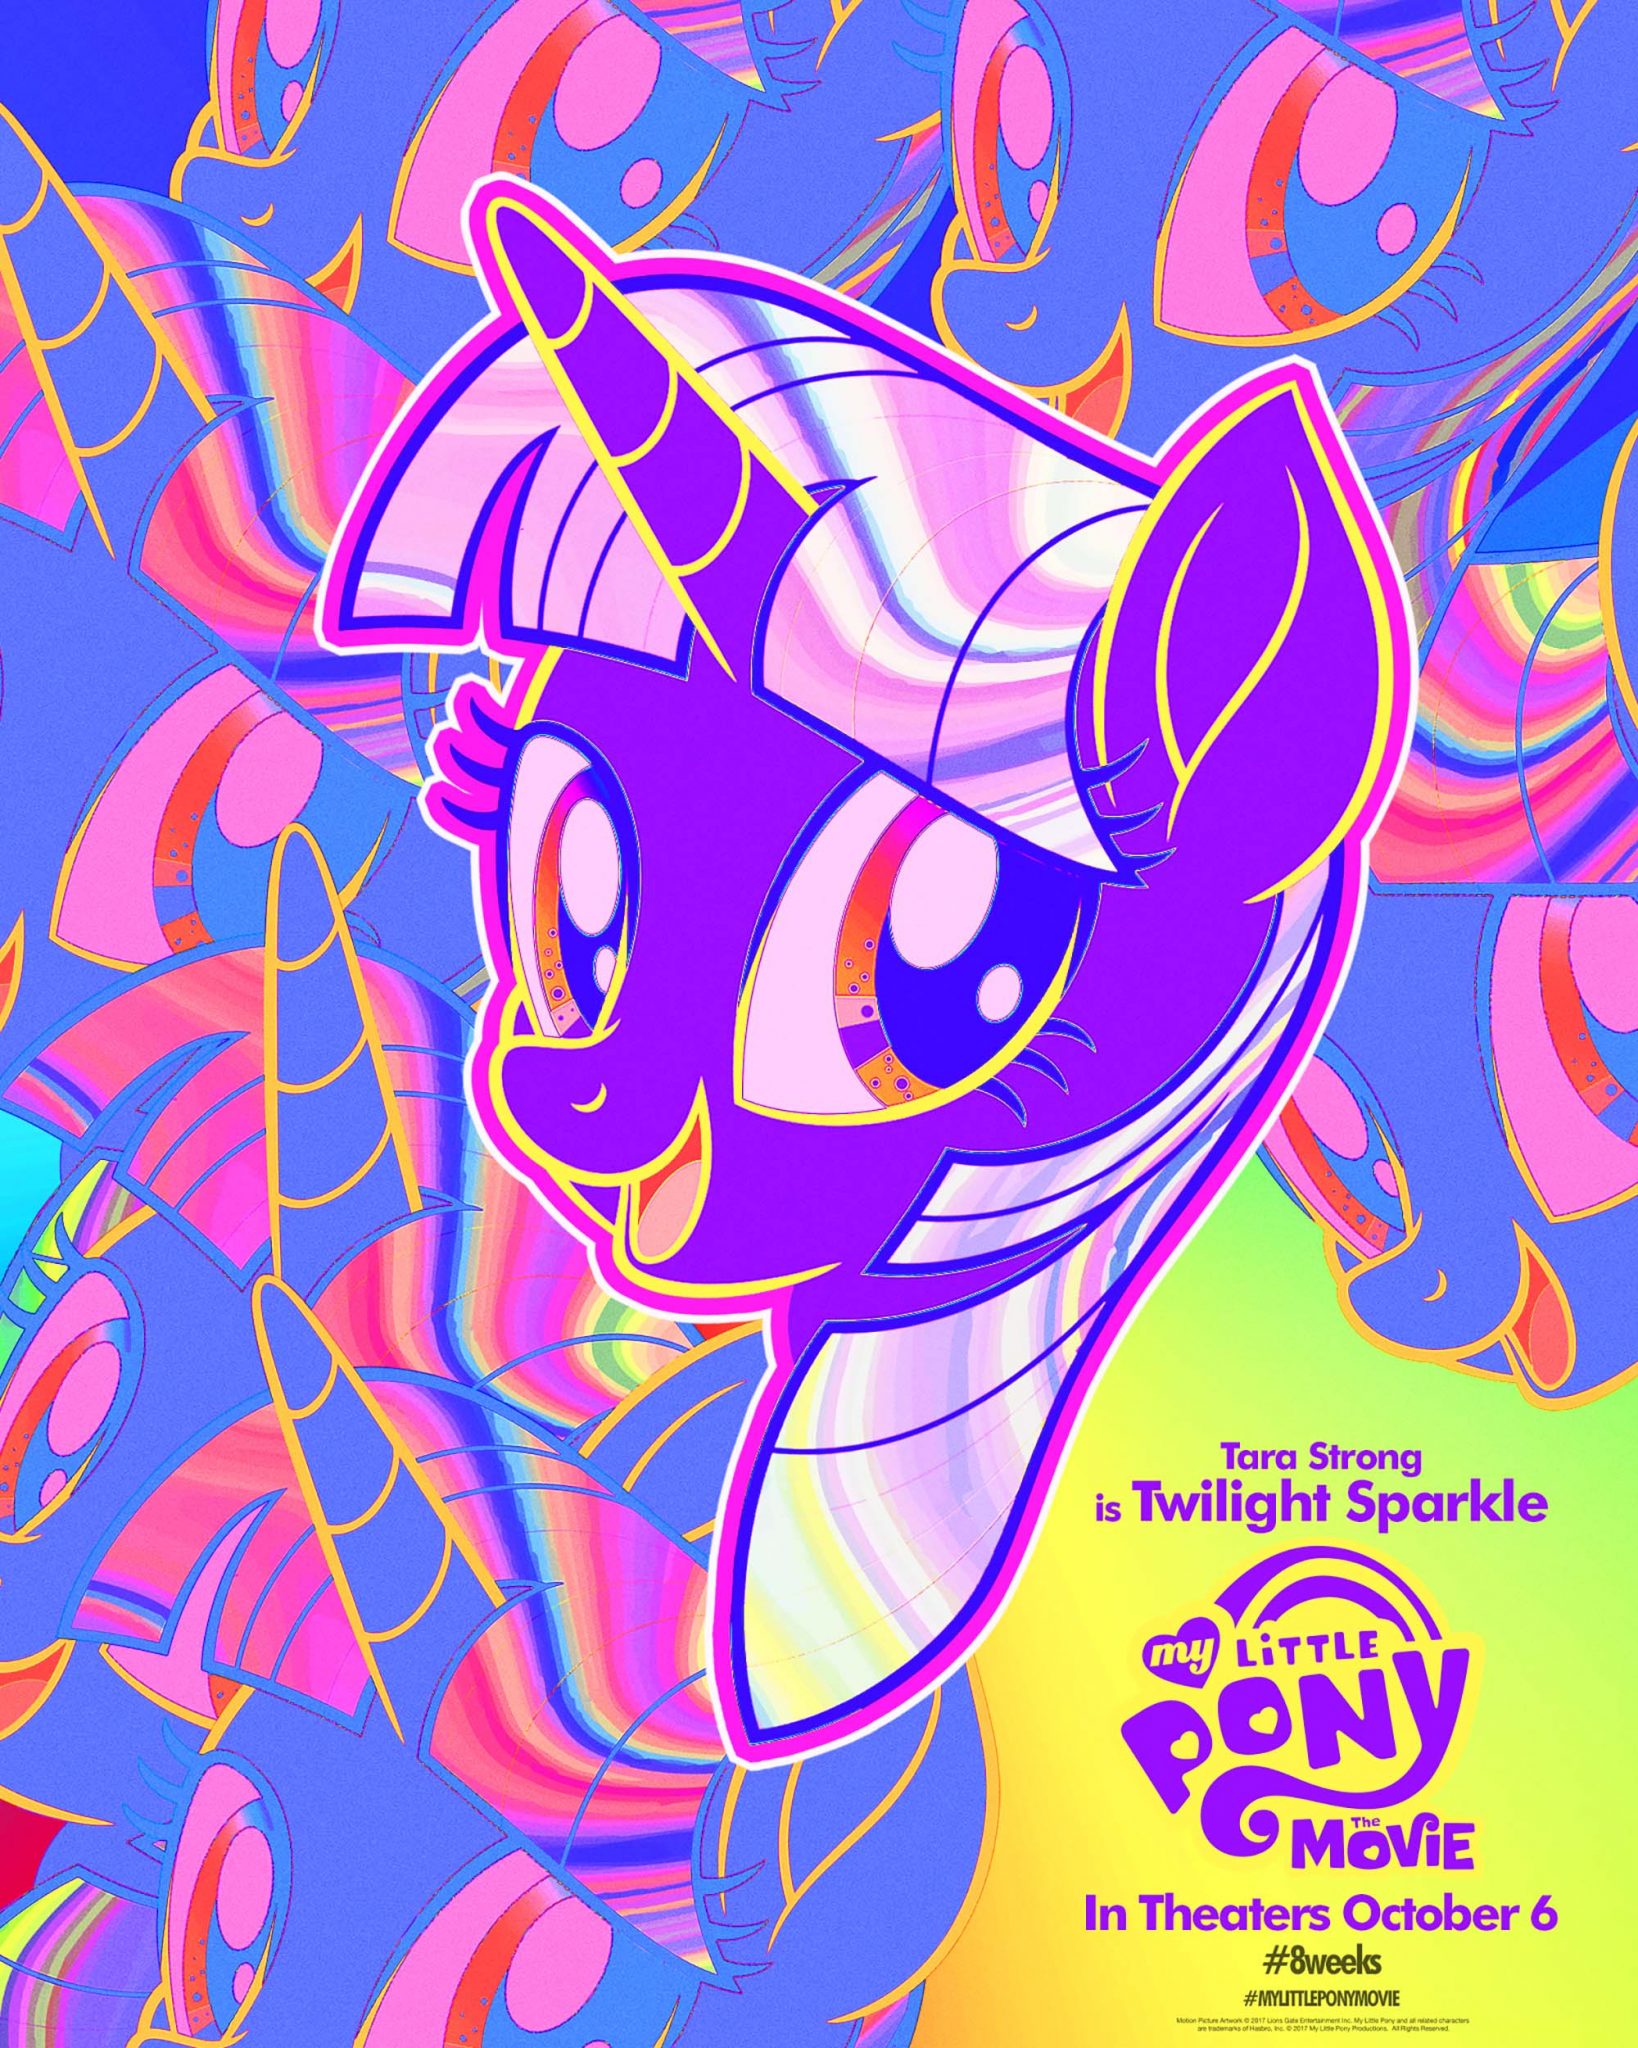 New Movie: My Little Pony The Movie